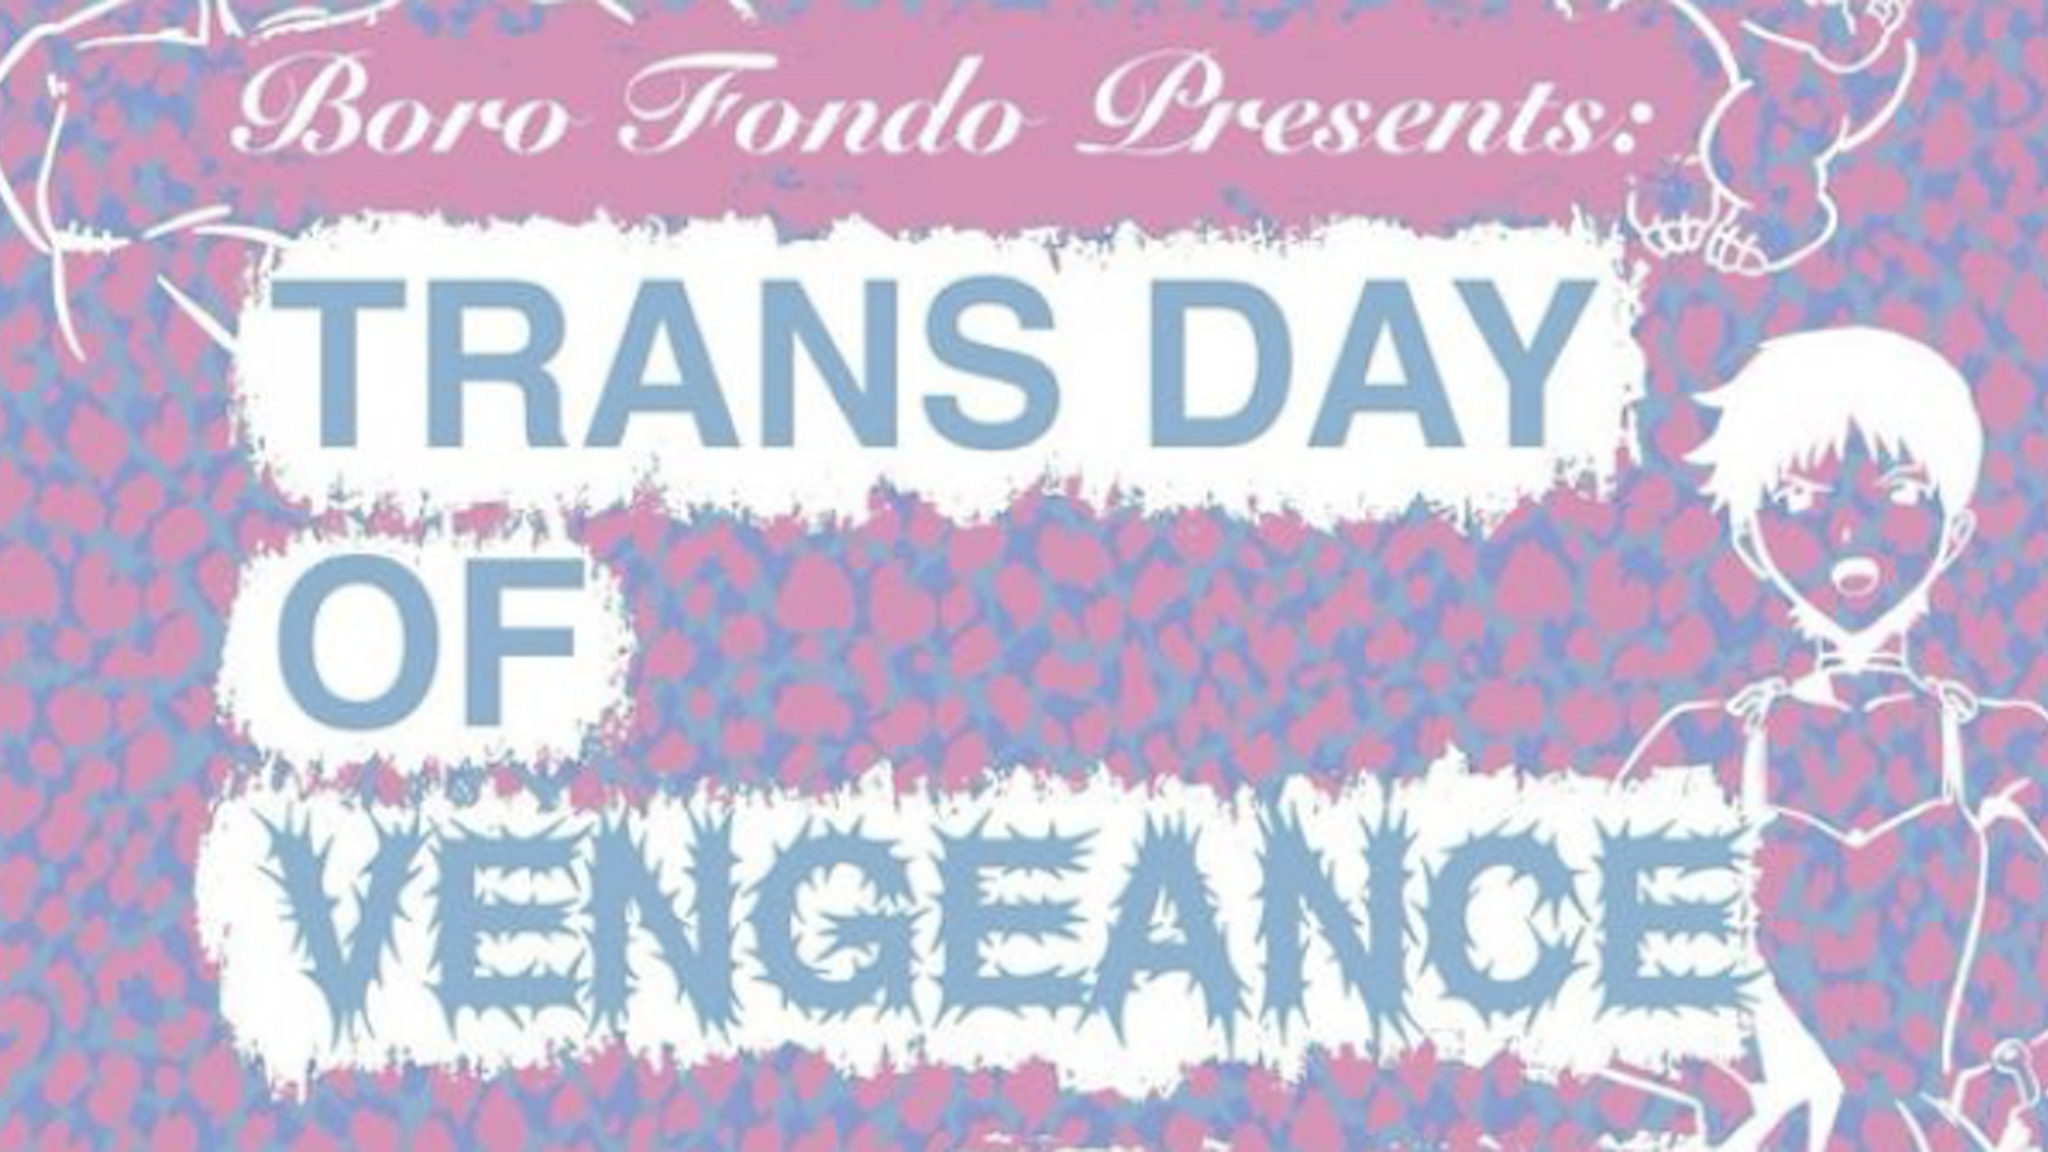 Trans Day of Vengeance flyer / Boro Fondo Instagram